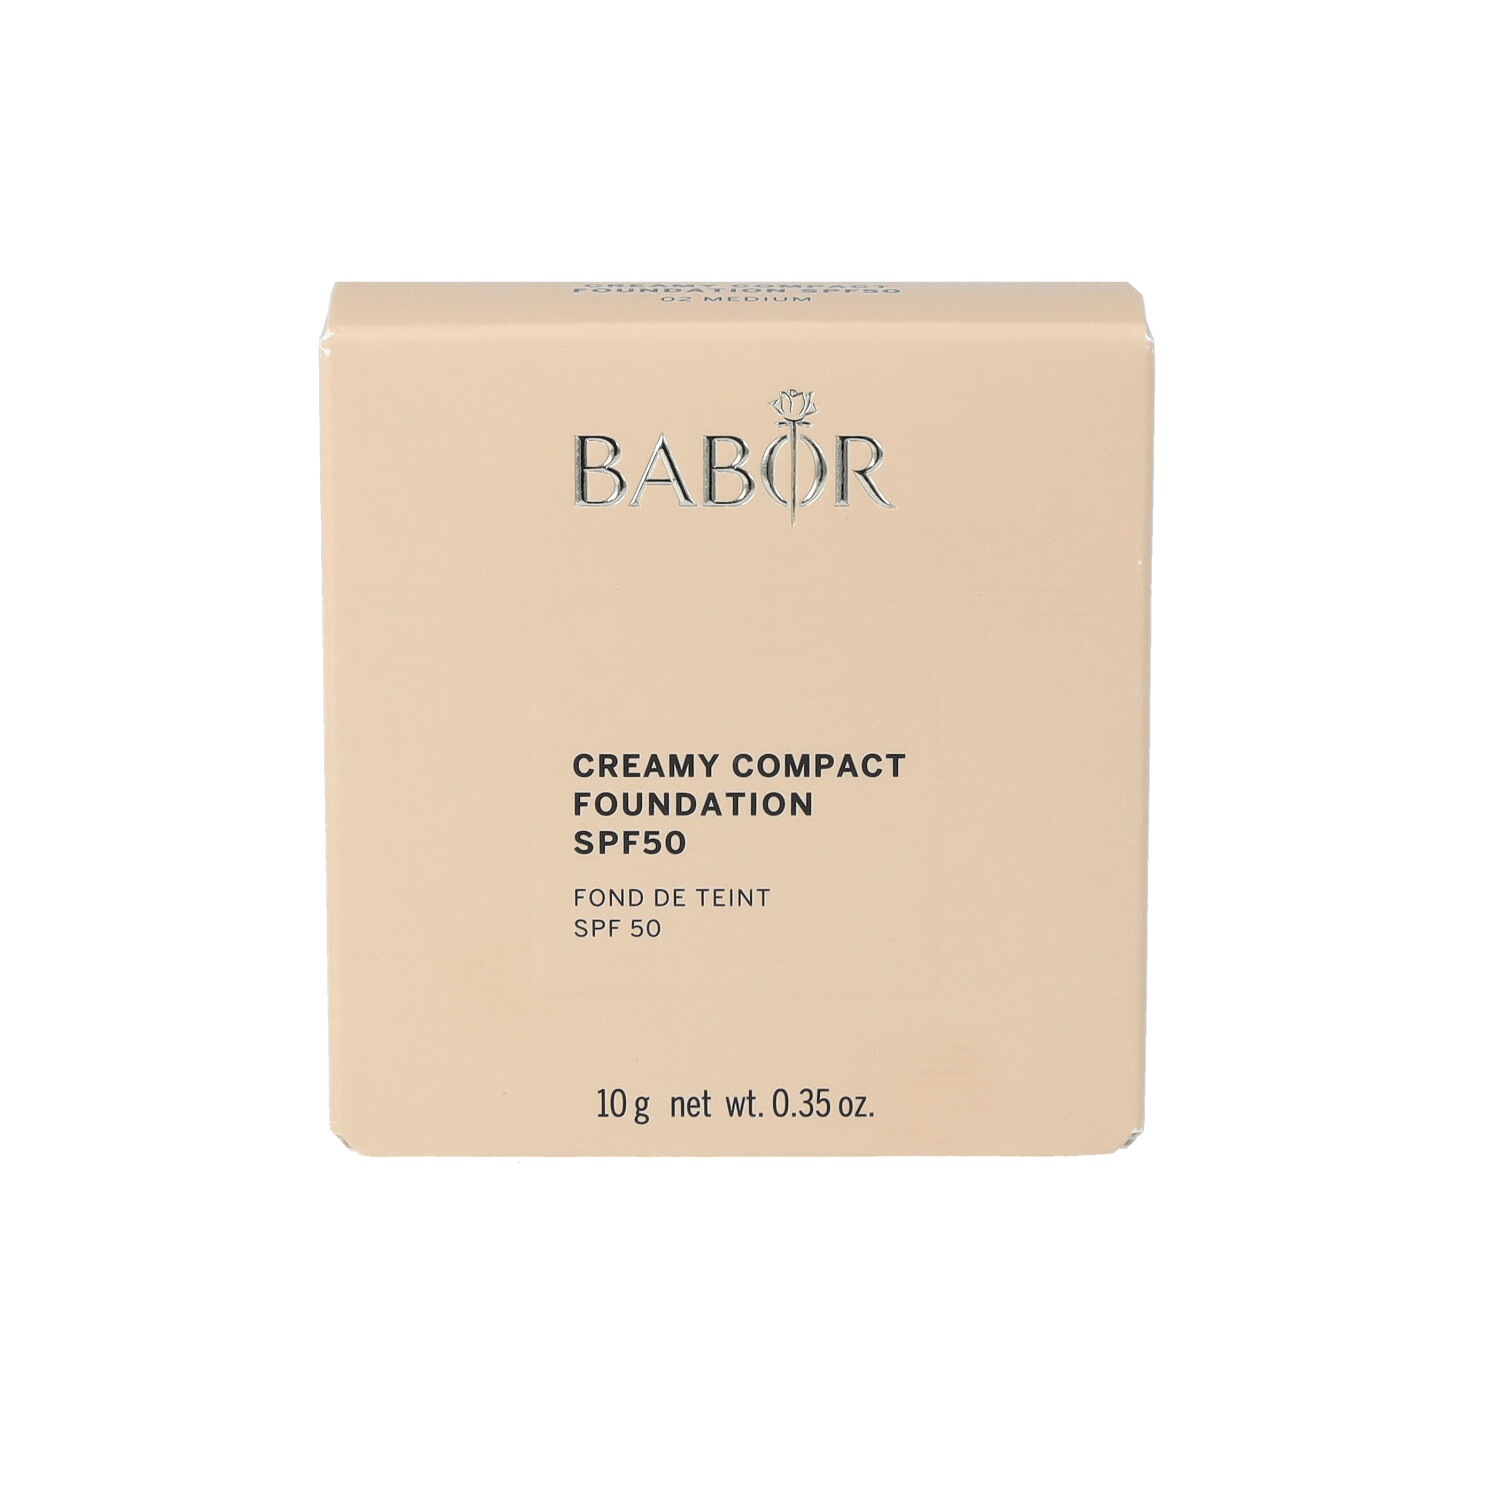 BABOR Creamy Compact Foundation SPF 50 02 medium